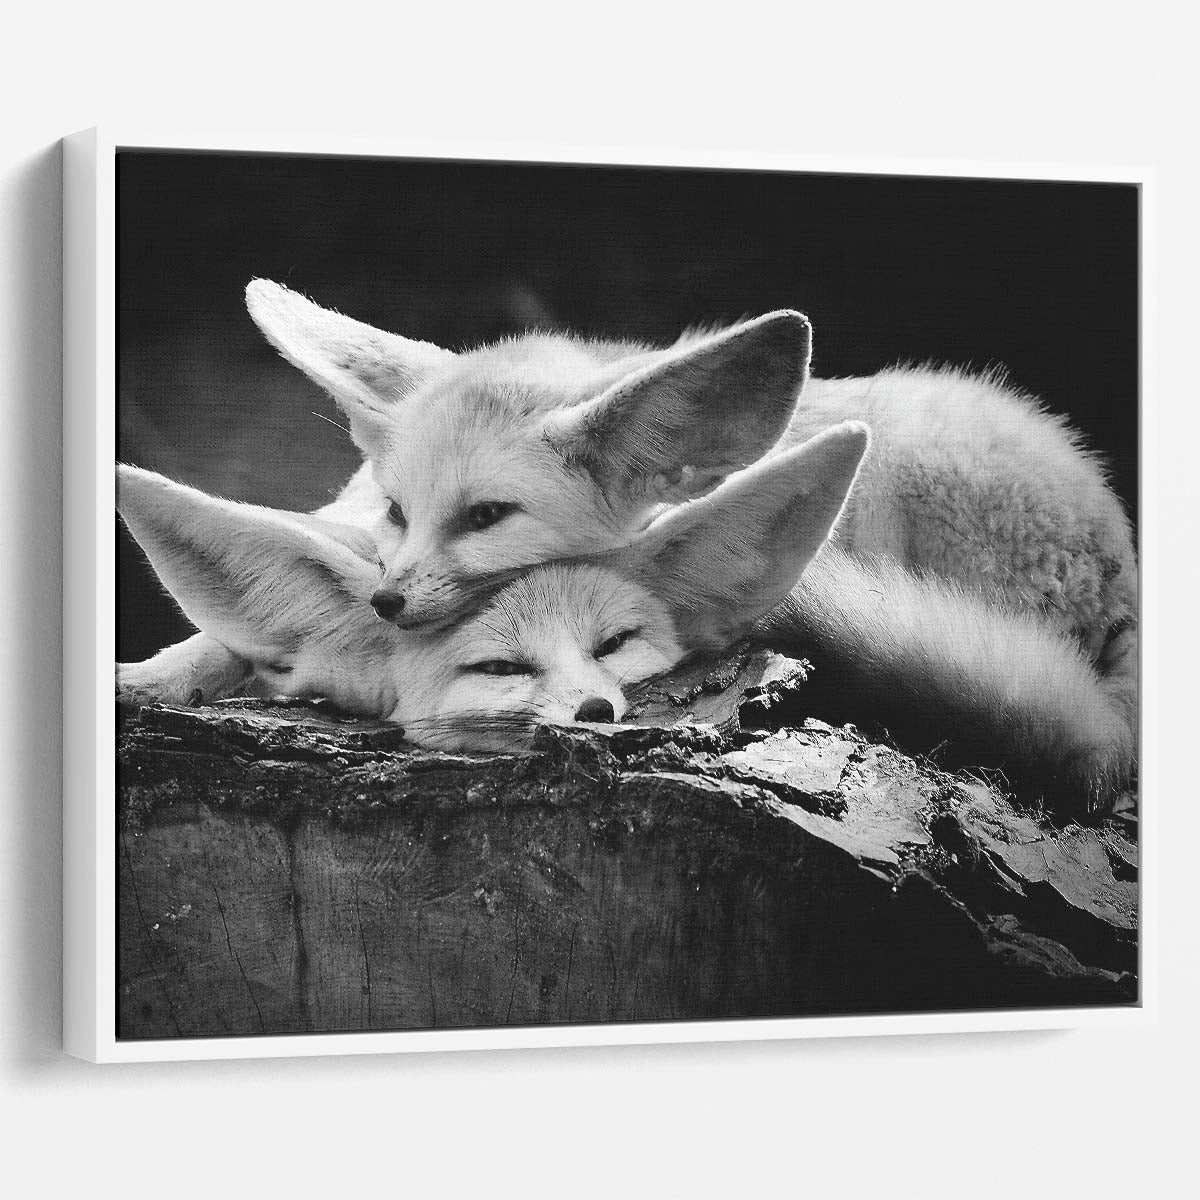 Joyful Fennec Fox Pair Embrace Monochrome Wall Art by Luxuriance Designs. Made in USA.